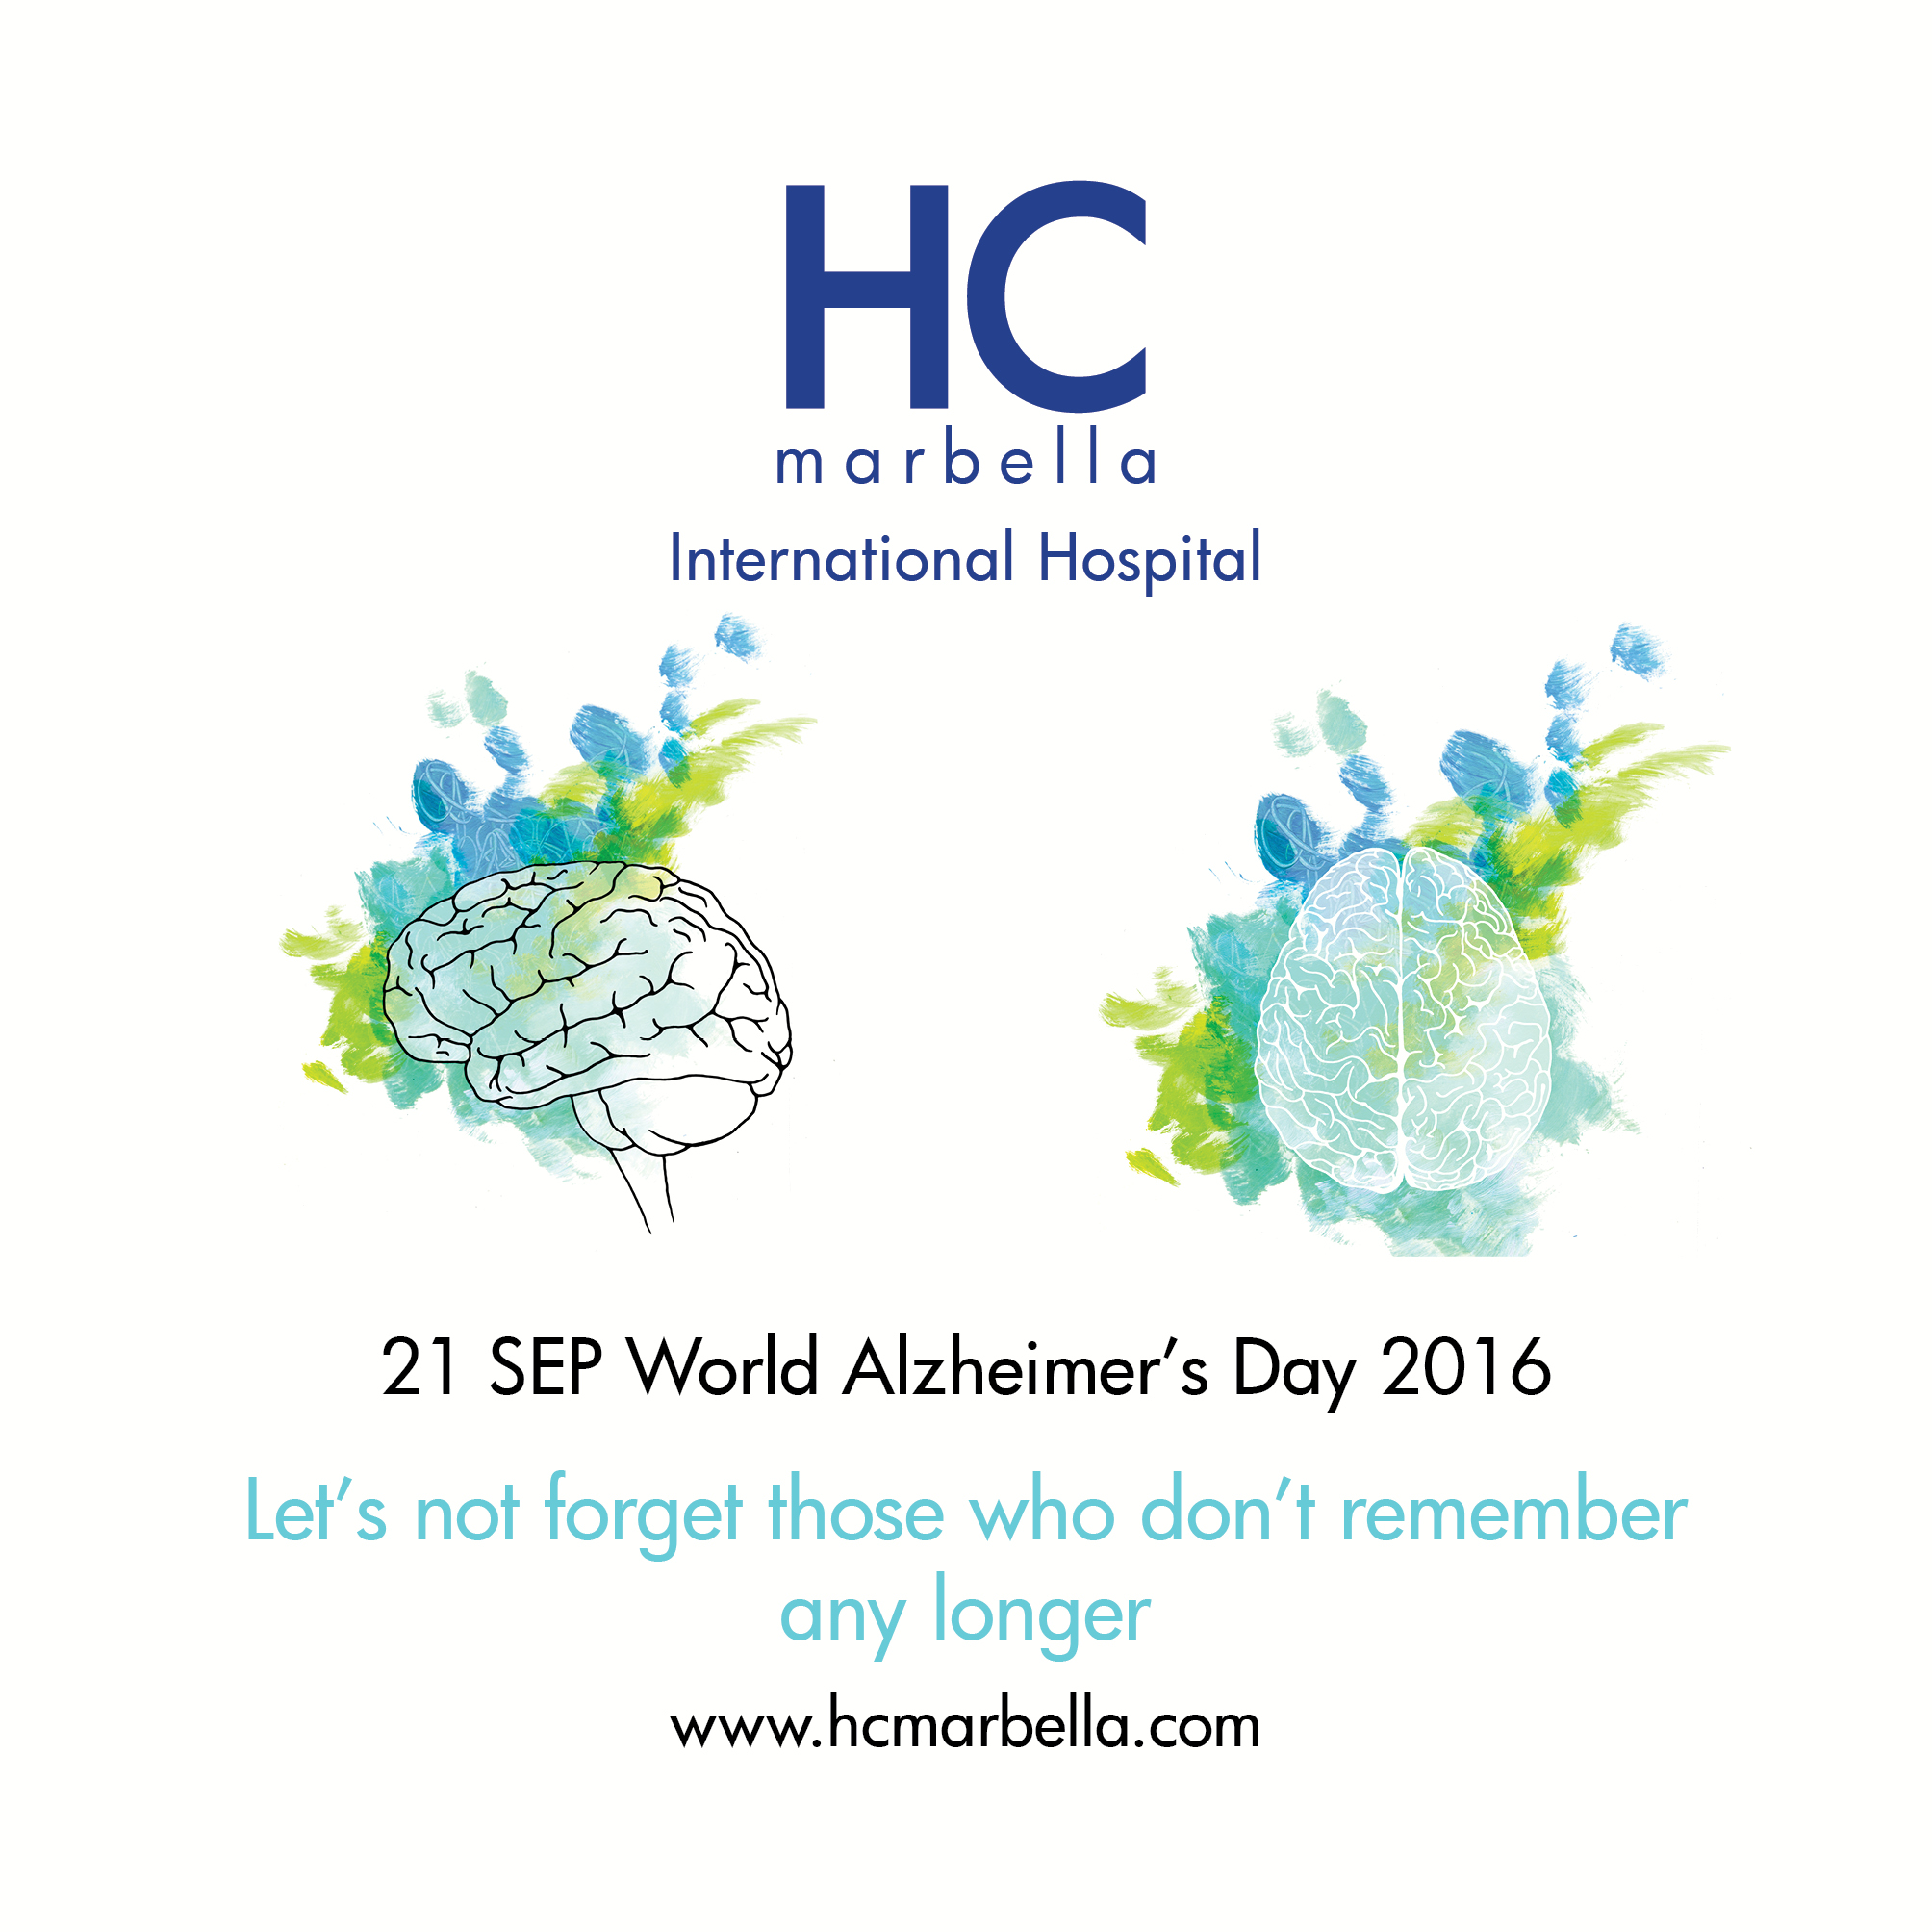 21 SEP World Alzheimer’s Day 2016